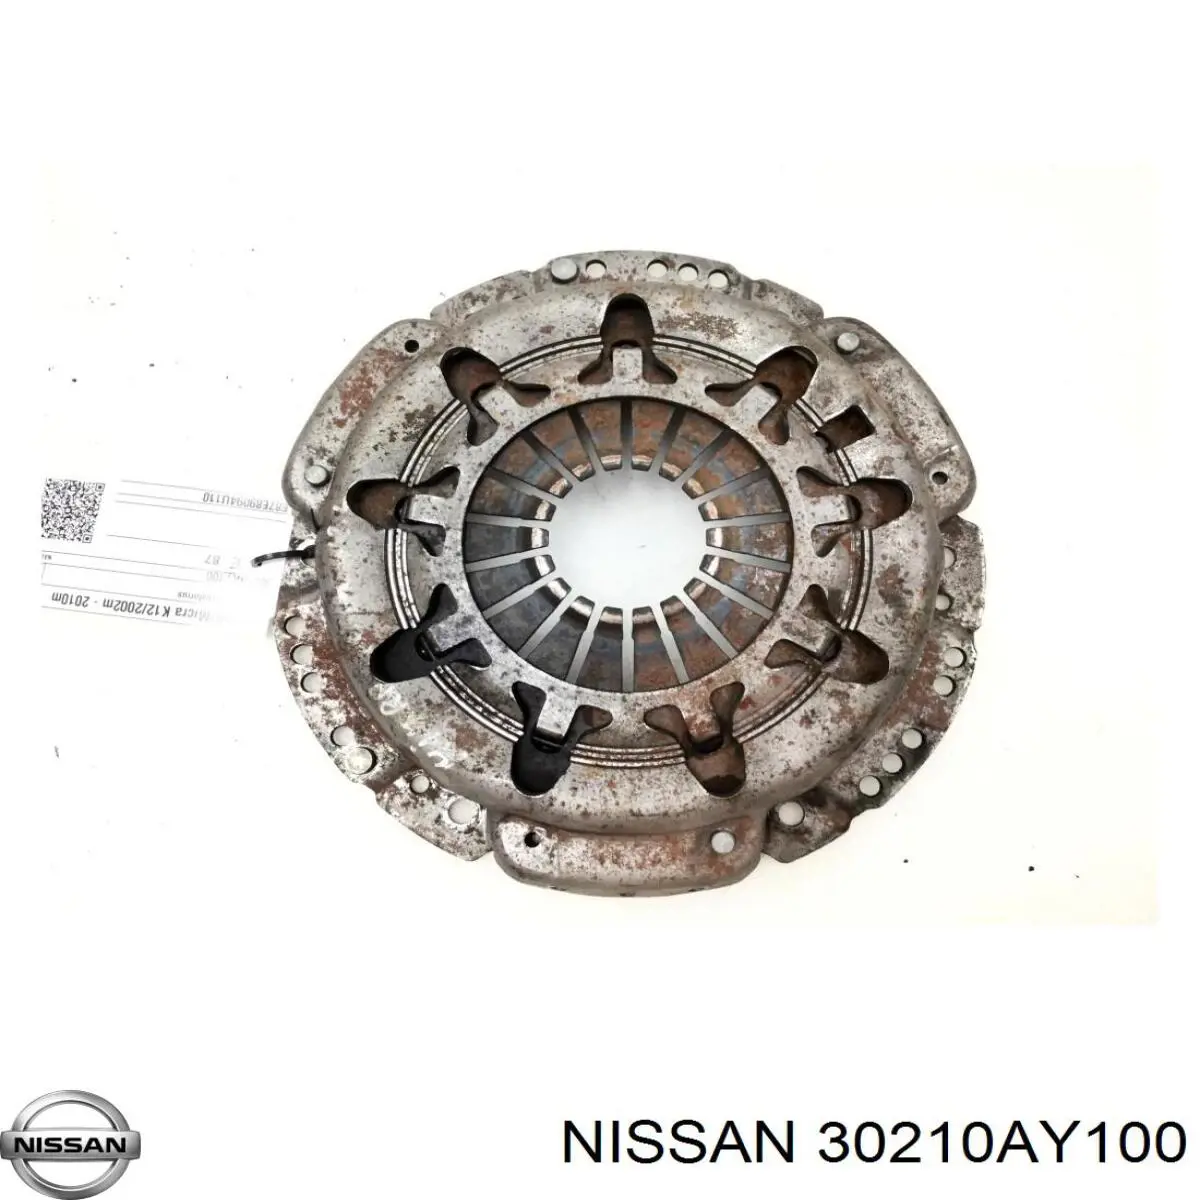 30210AY100 Nissan plato de presión de embrague